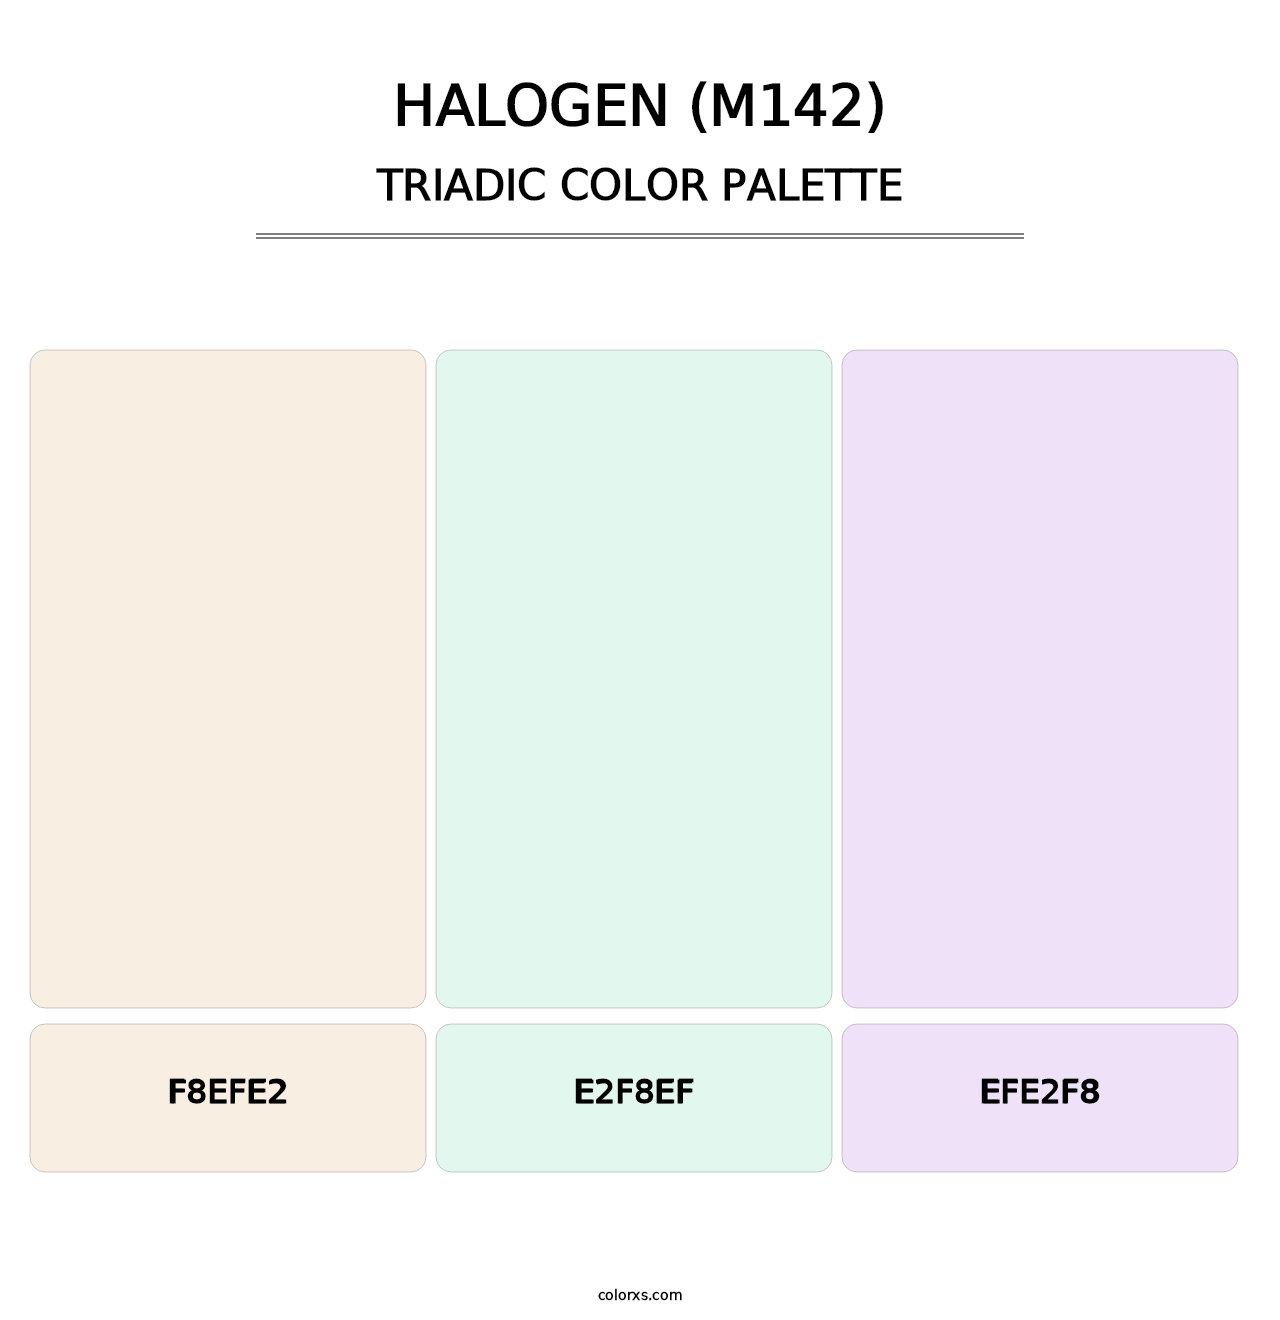 Halogen (M142) - Triadic Color Palette